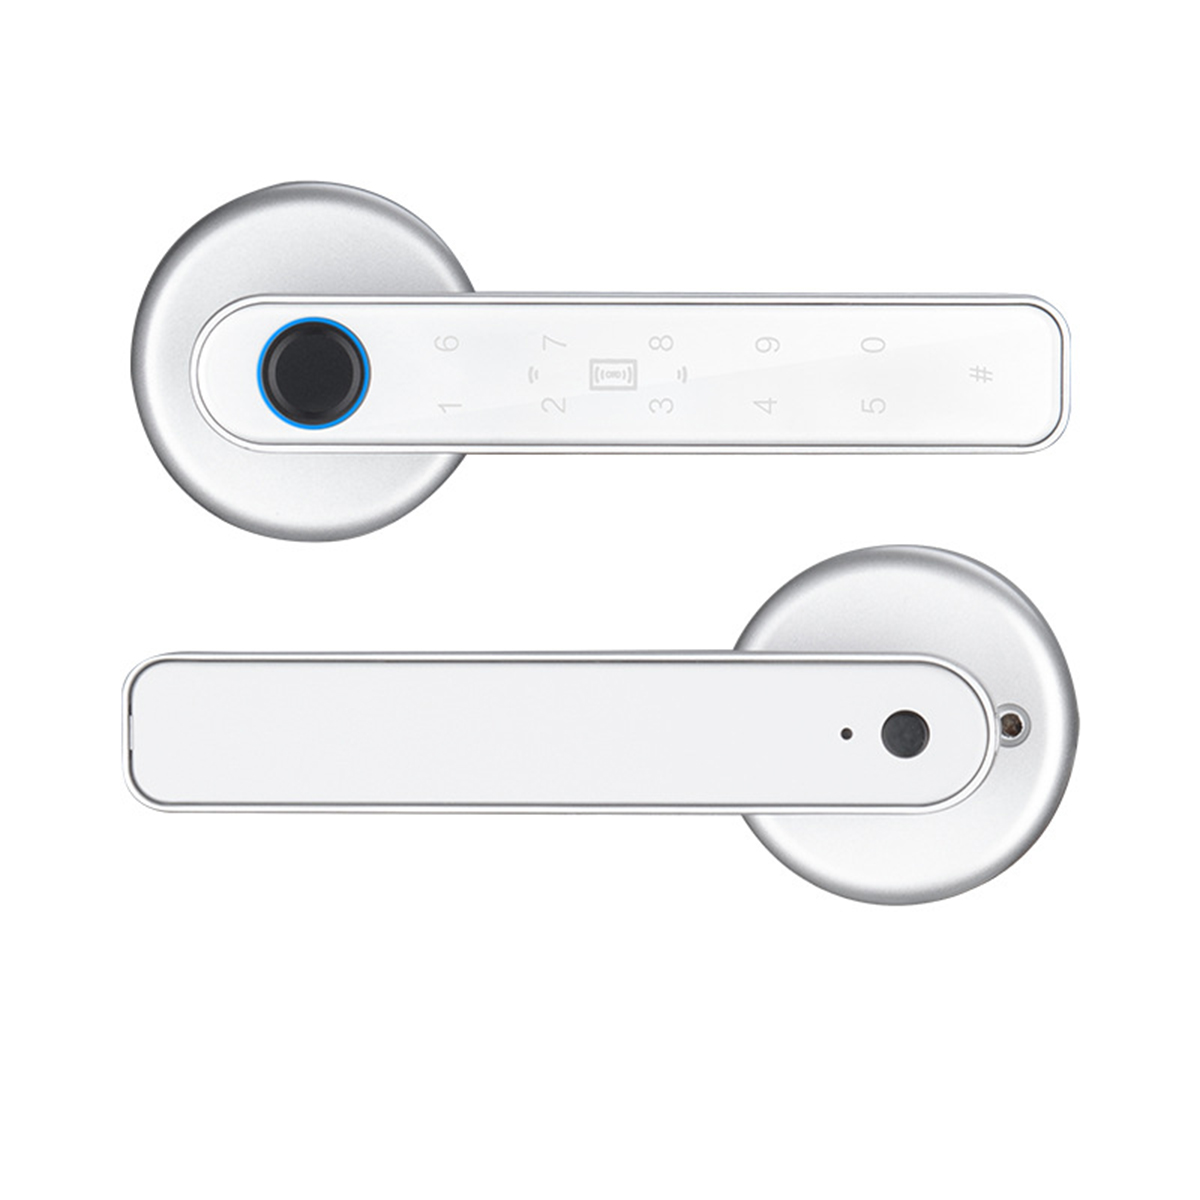 BYTELIKE weiß Unlock Büro Handy Einzeloperation, für Türschlösser, Lock Fingerprint Zimmertür Smart Bluetooth Smarte Türschloss Lock